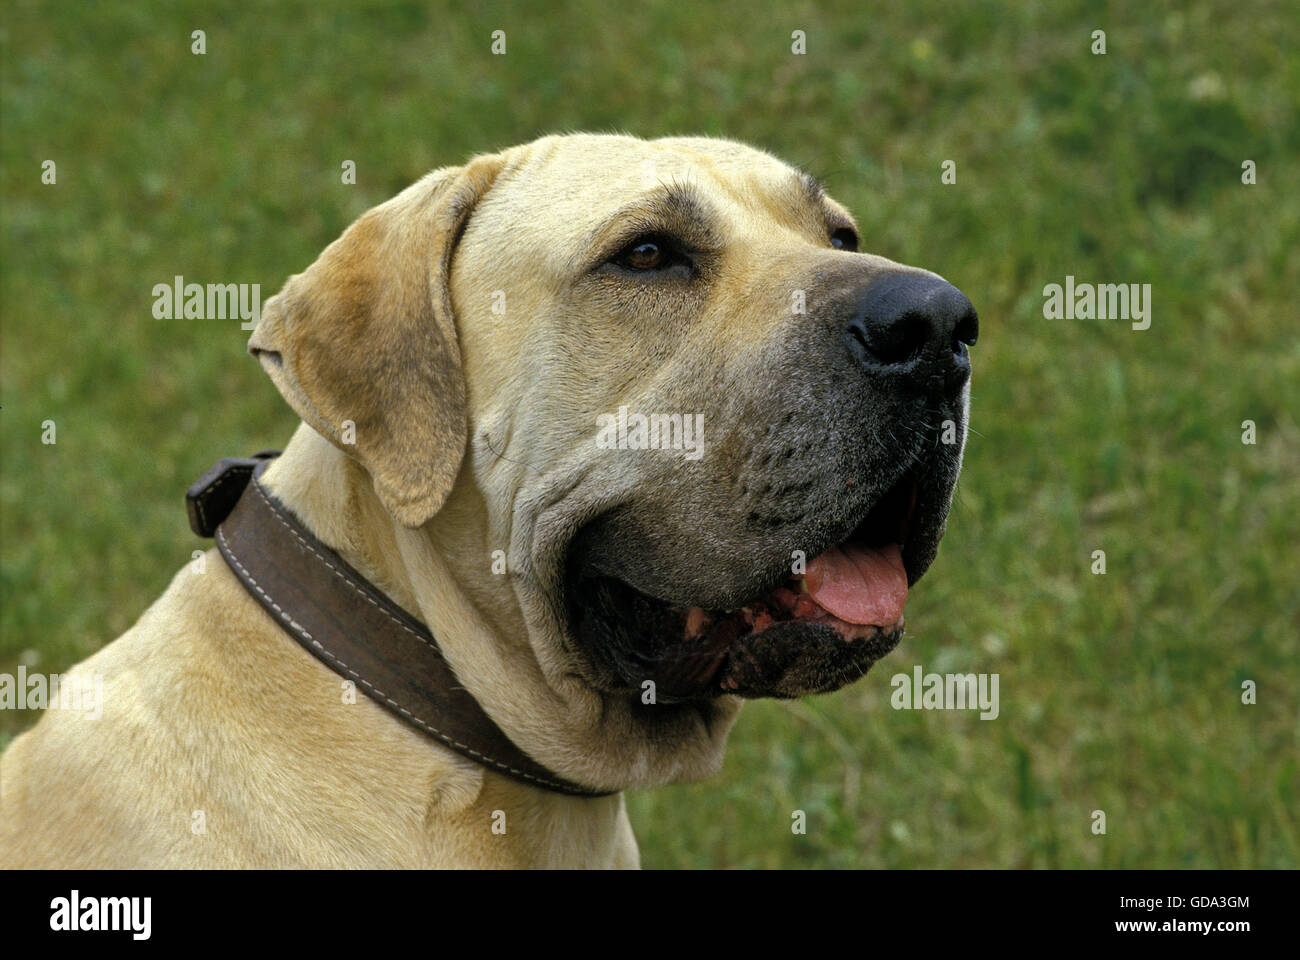 Fila brasileiro dog in front of a white background Stock Photo - Alamy